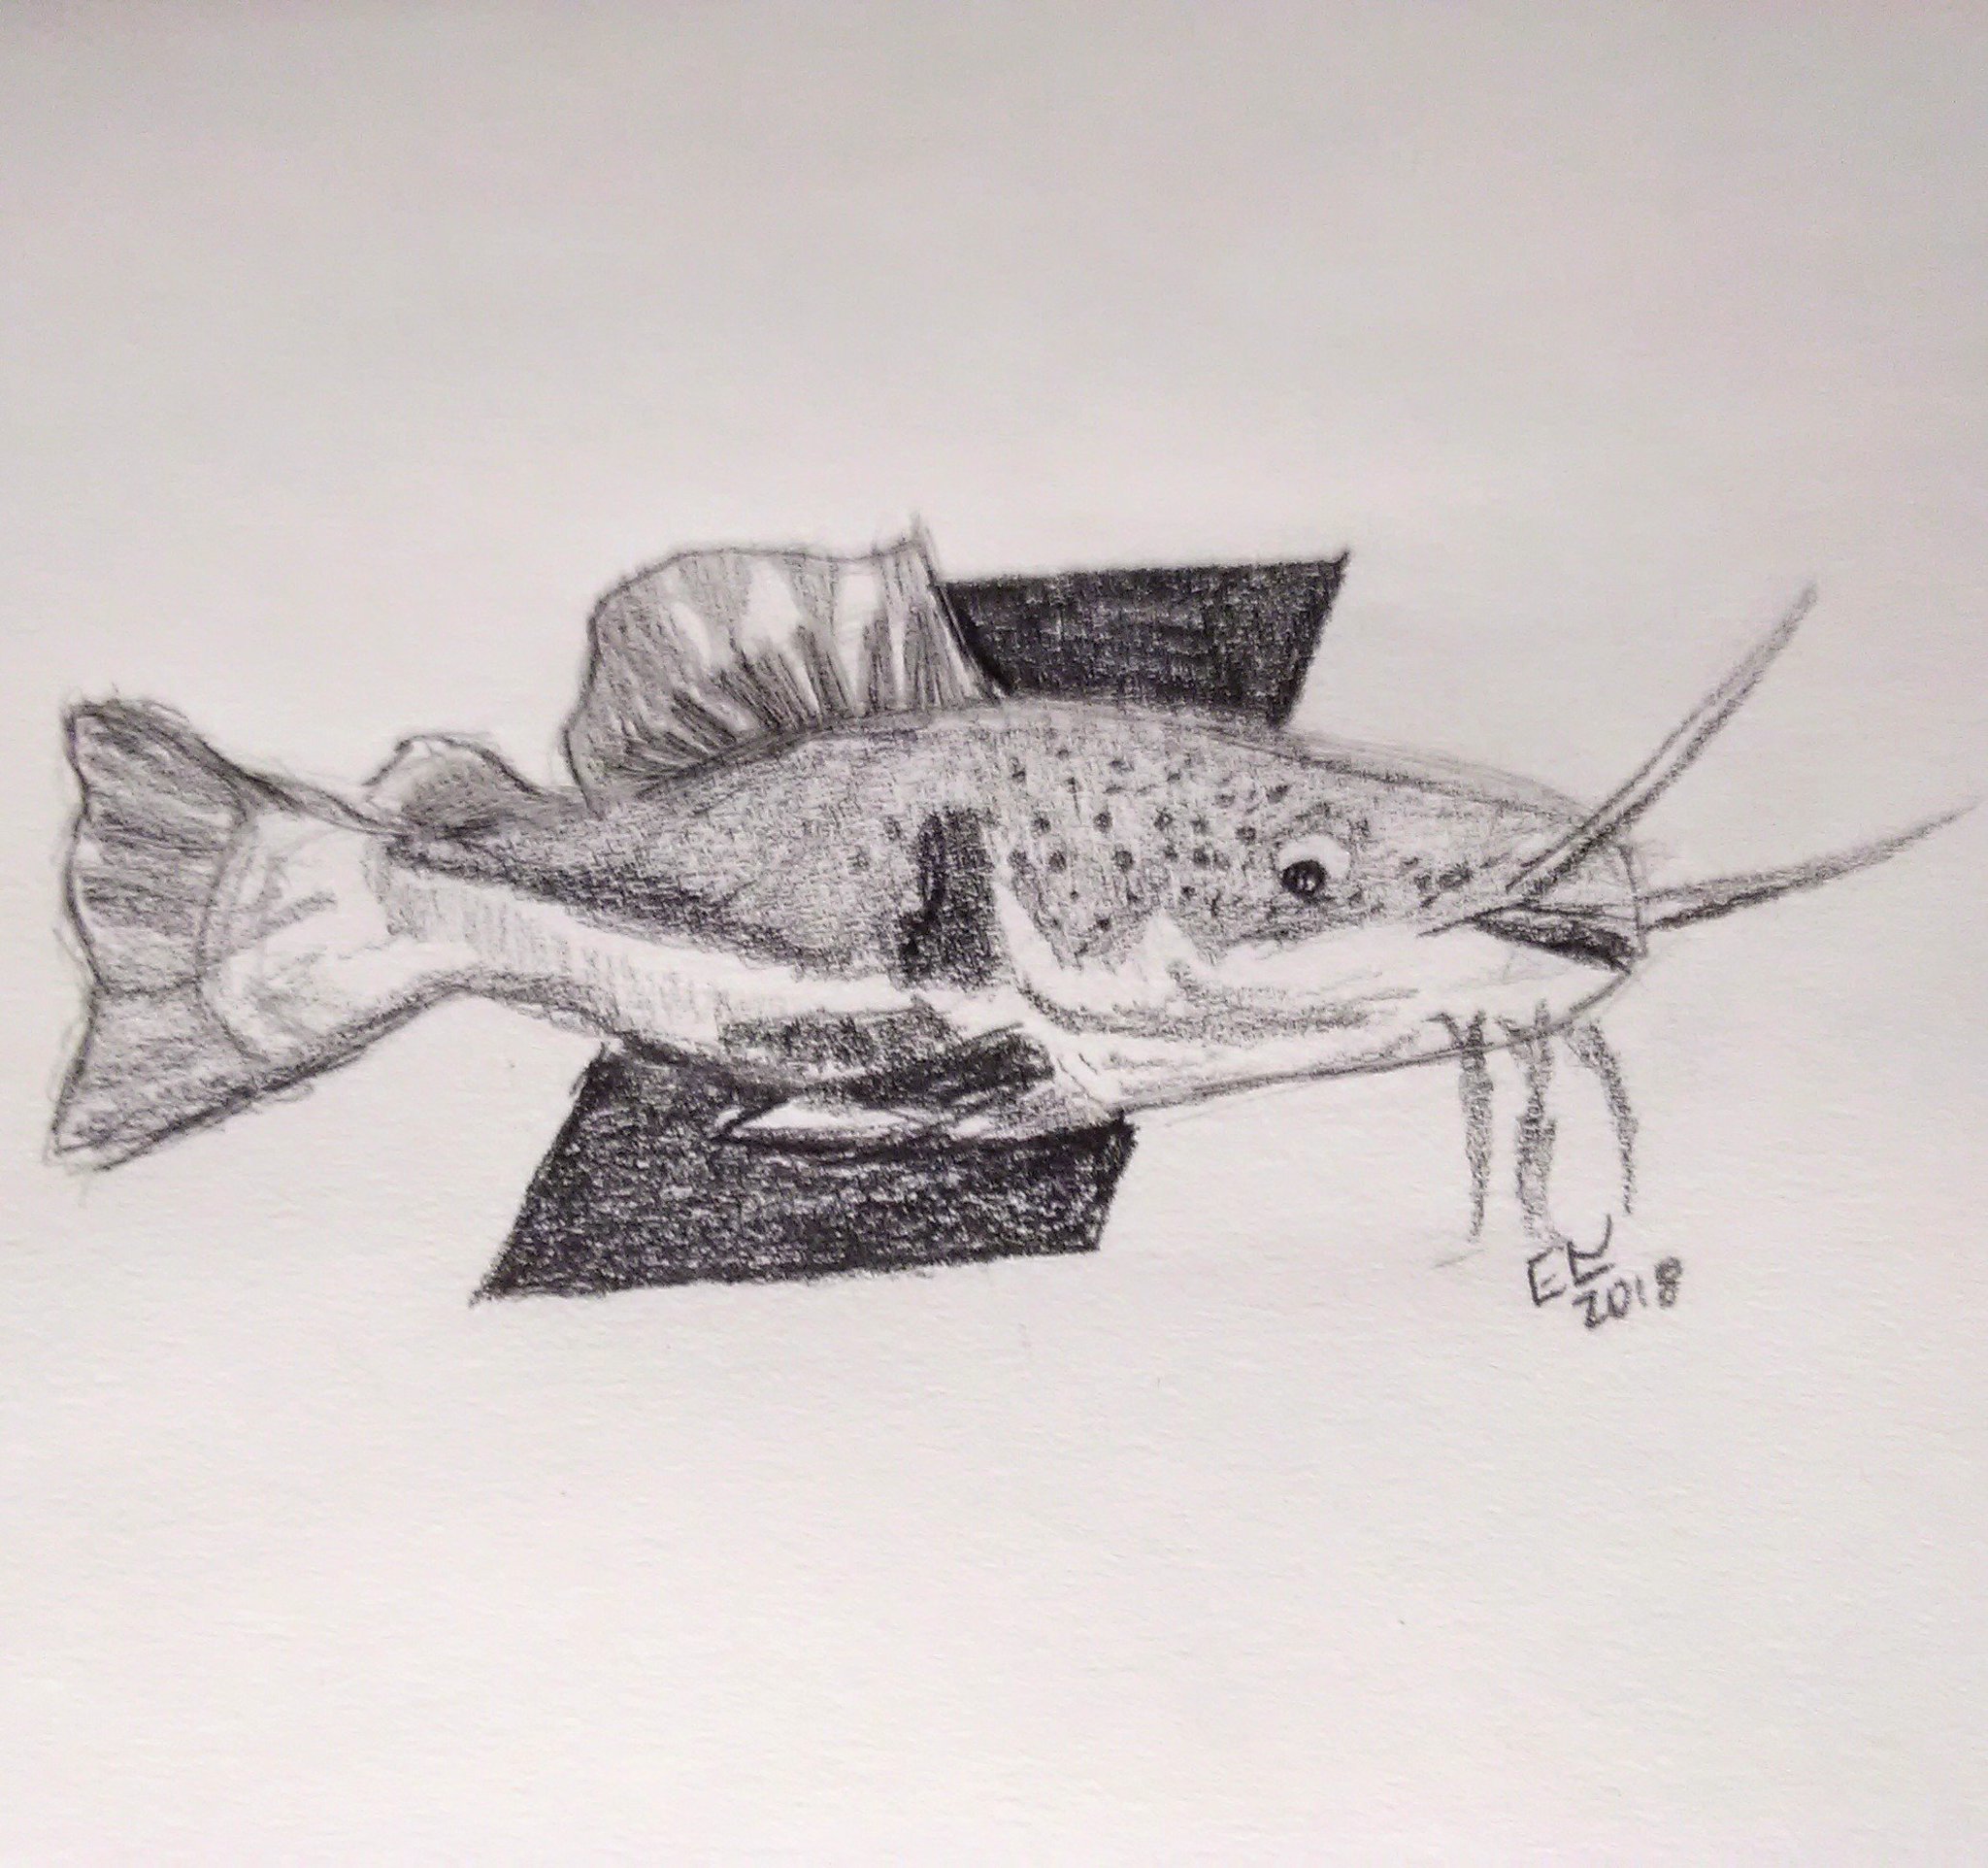 Ethan on X: Red tail catfish #EthanSketches #DailySketch #Sketch #Sketching  #Sketchbook #draw #drawing #art #artist #MondayMotivation #fish #aquarium  #cute #fishing #Catfish #redtailcatfish  / X